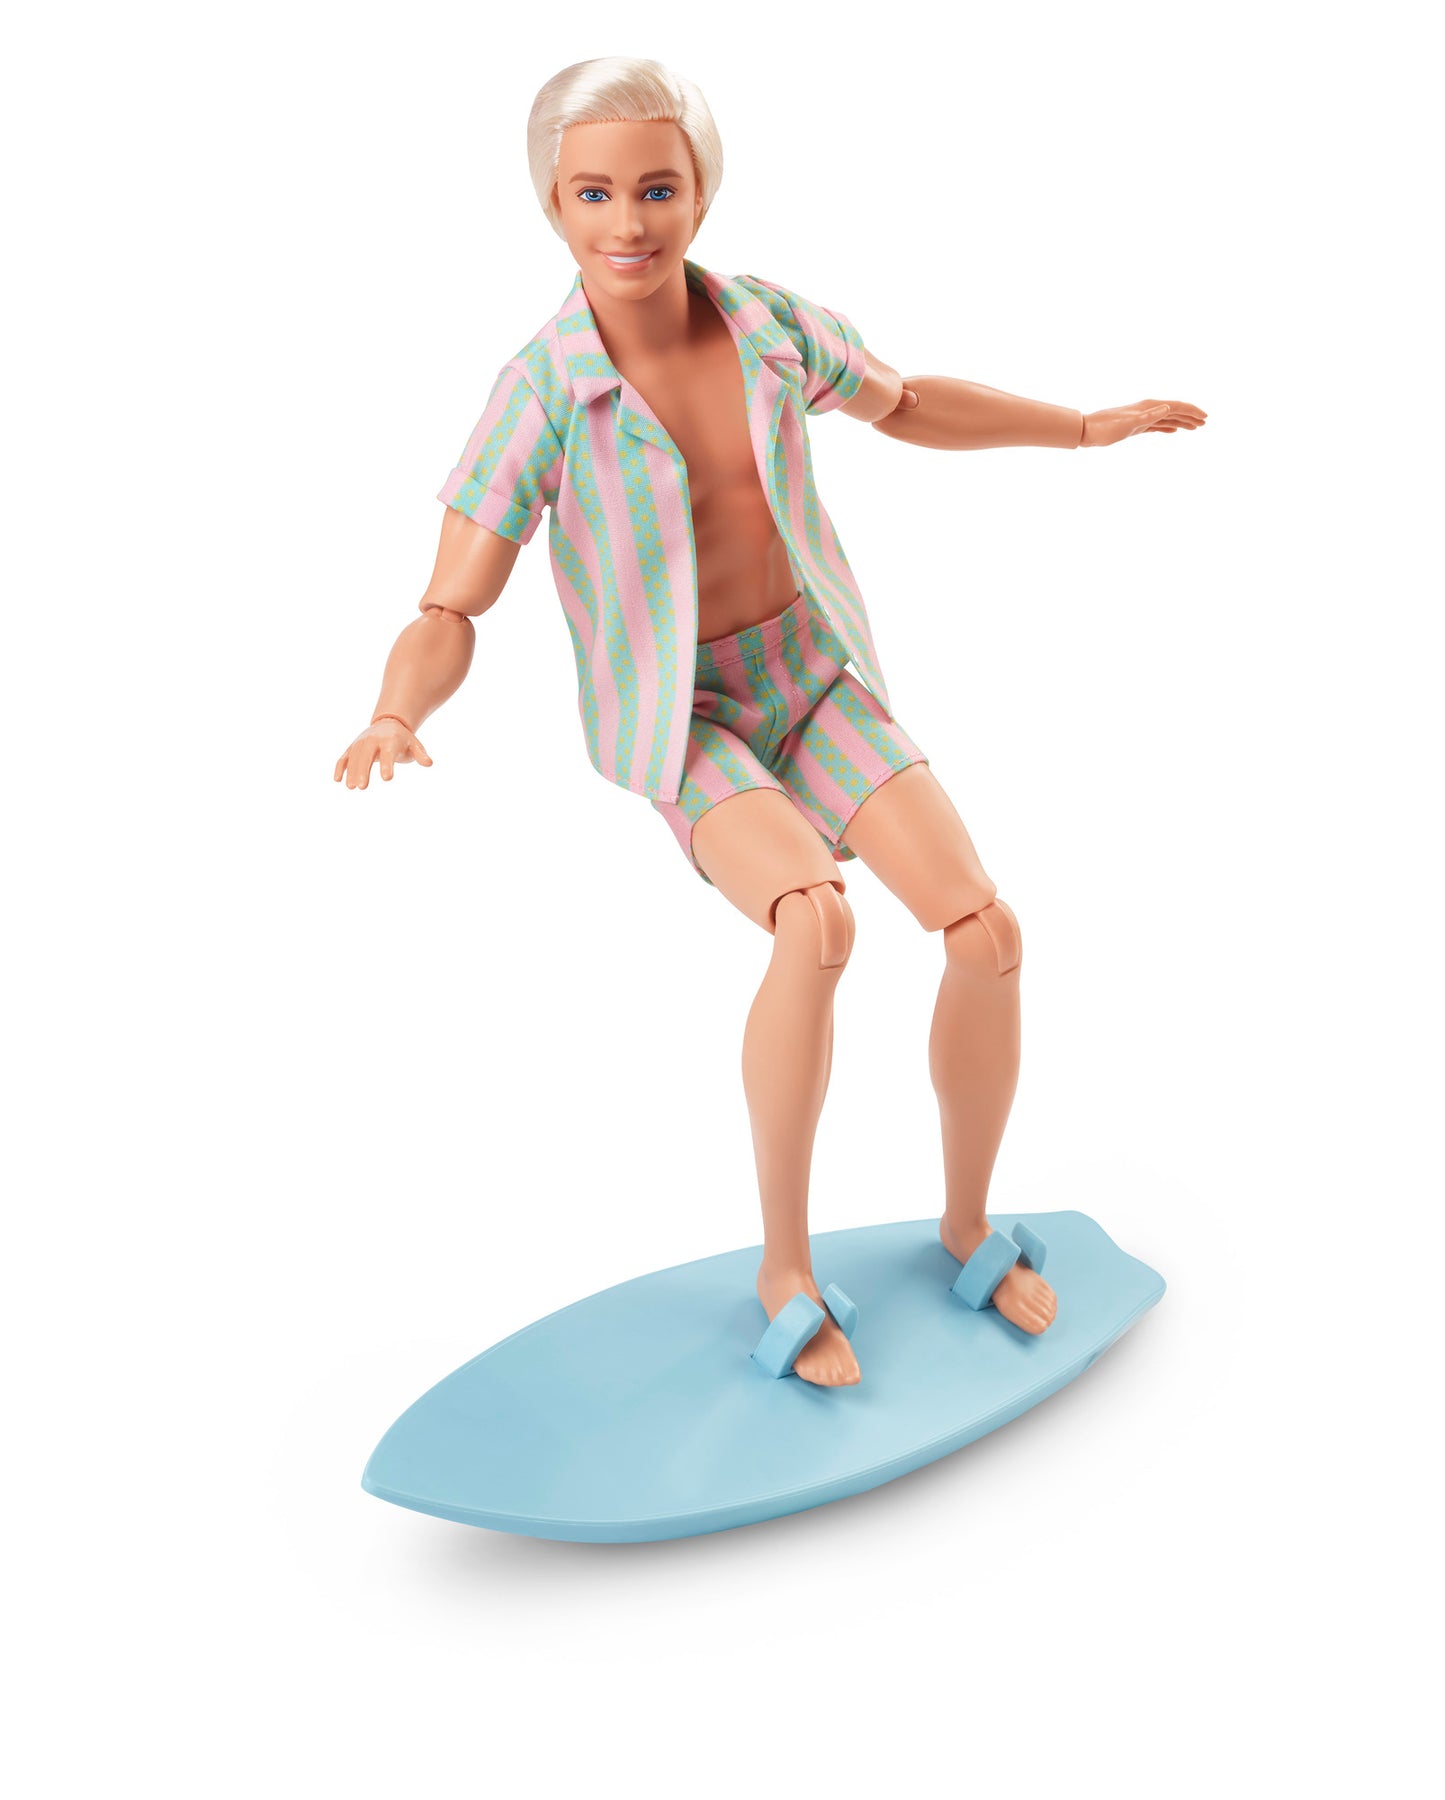 Barbie Movie Ken Doll Wearing Pastel Striped Beach Matching Set